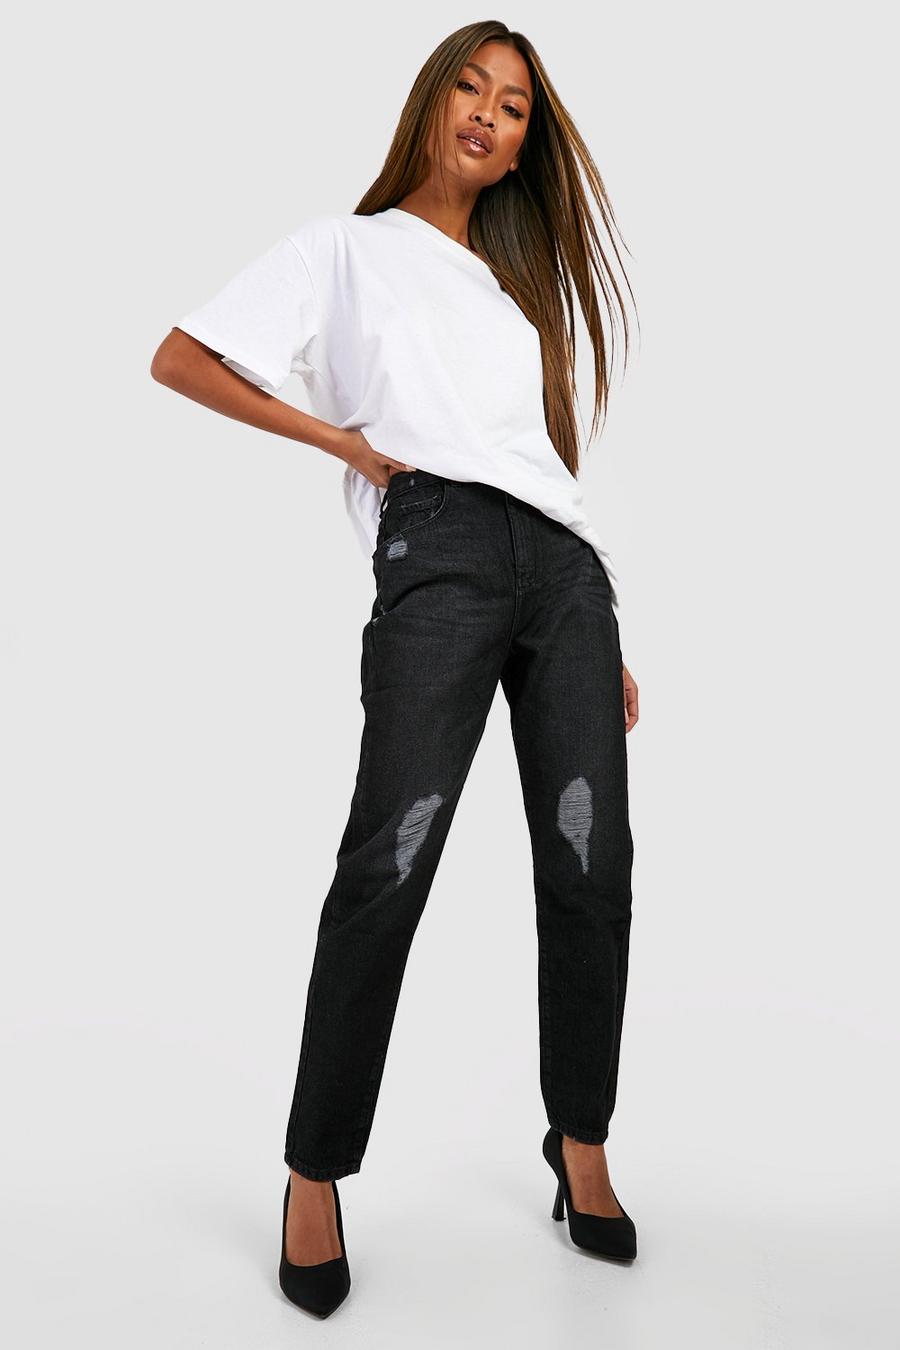 Black negro ג'ינס בגזרת מאם high waist עם שסע בברך